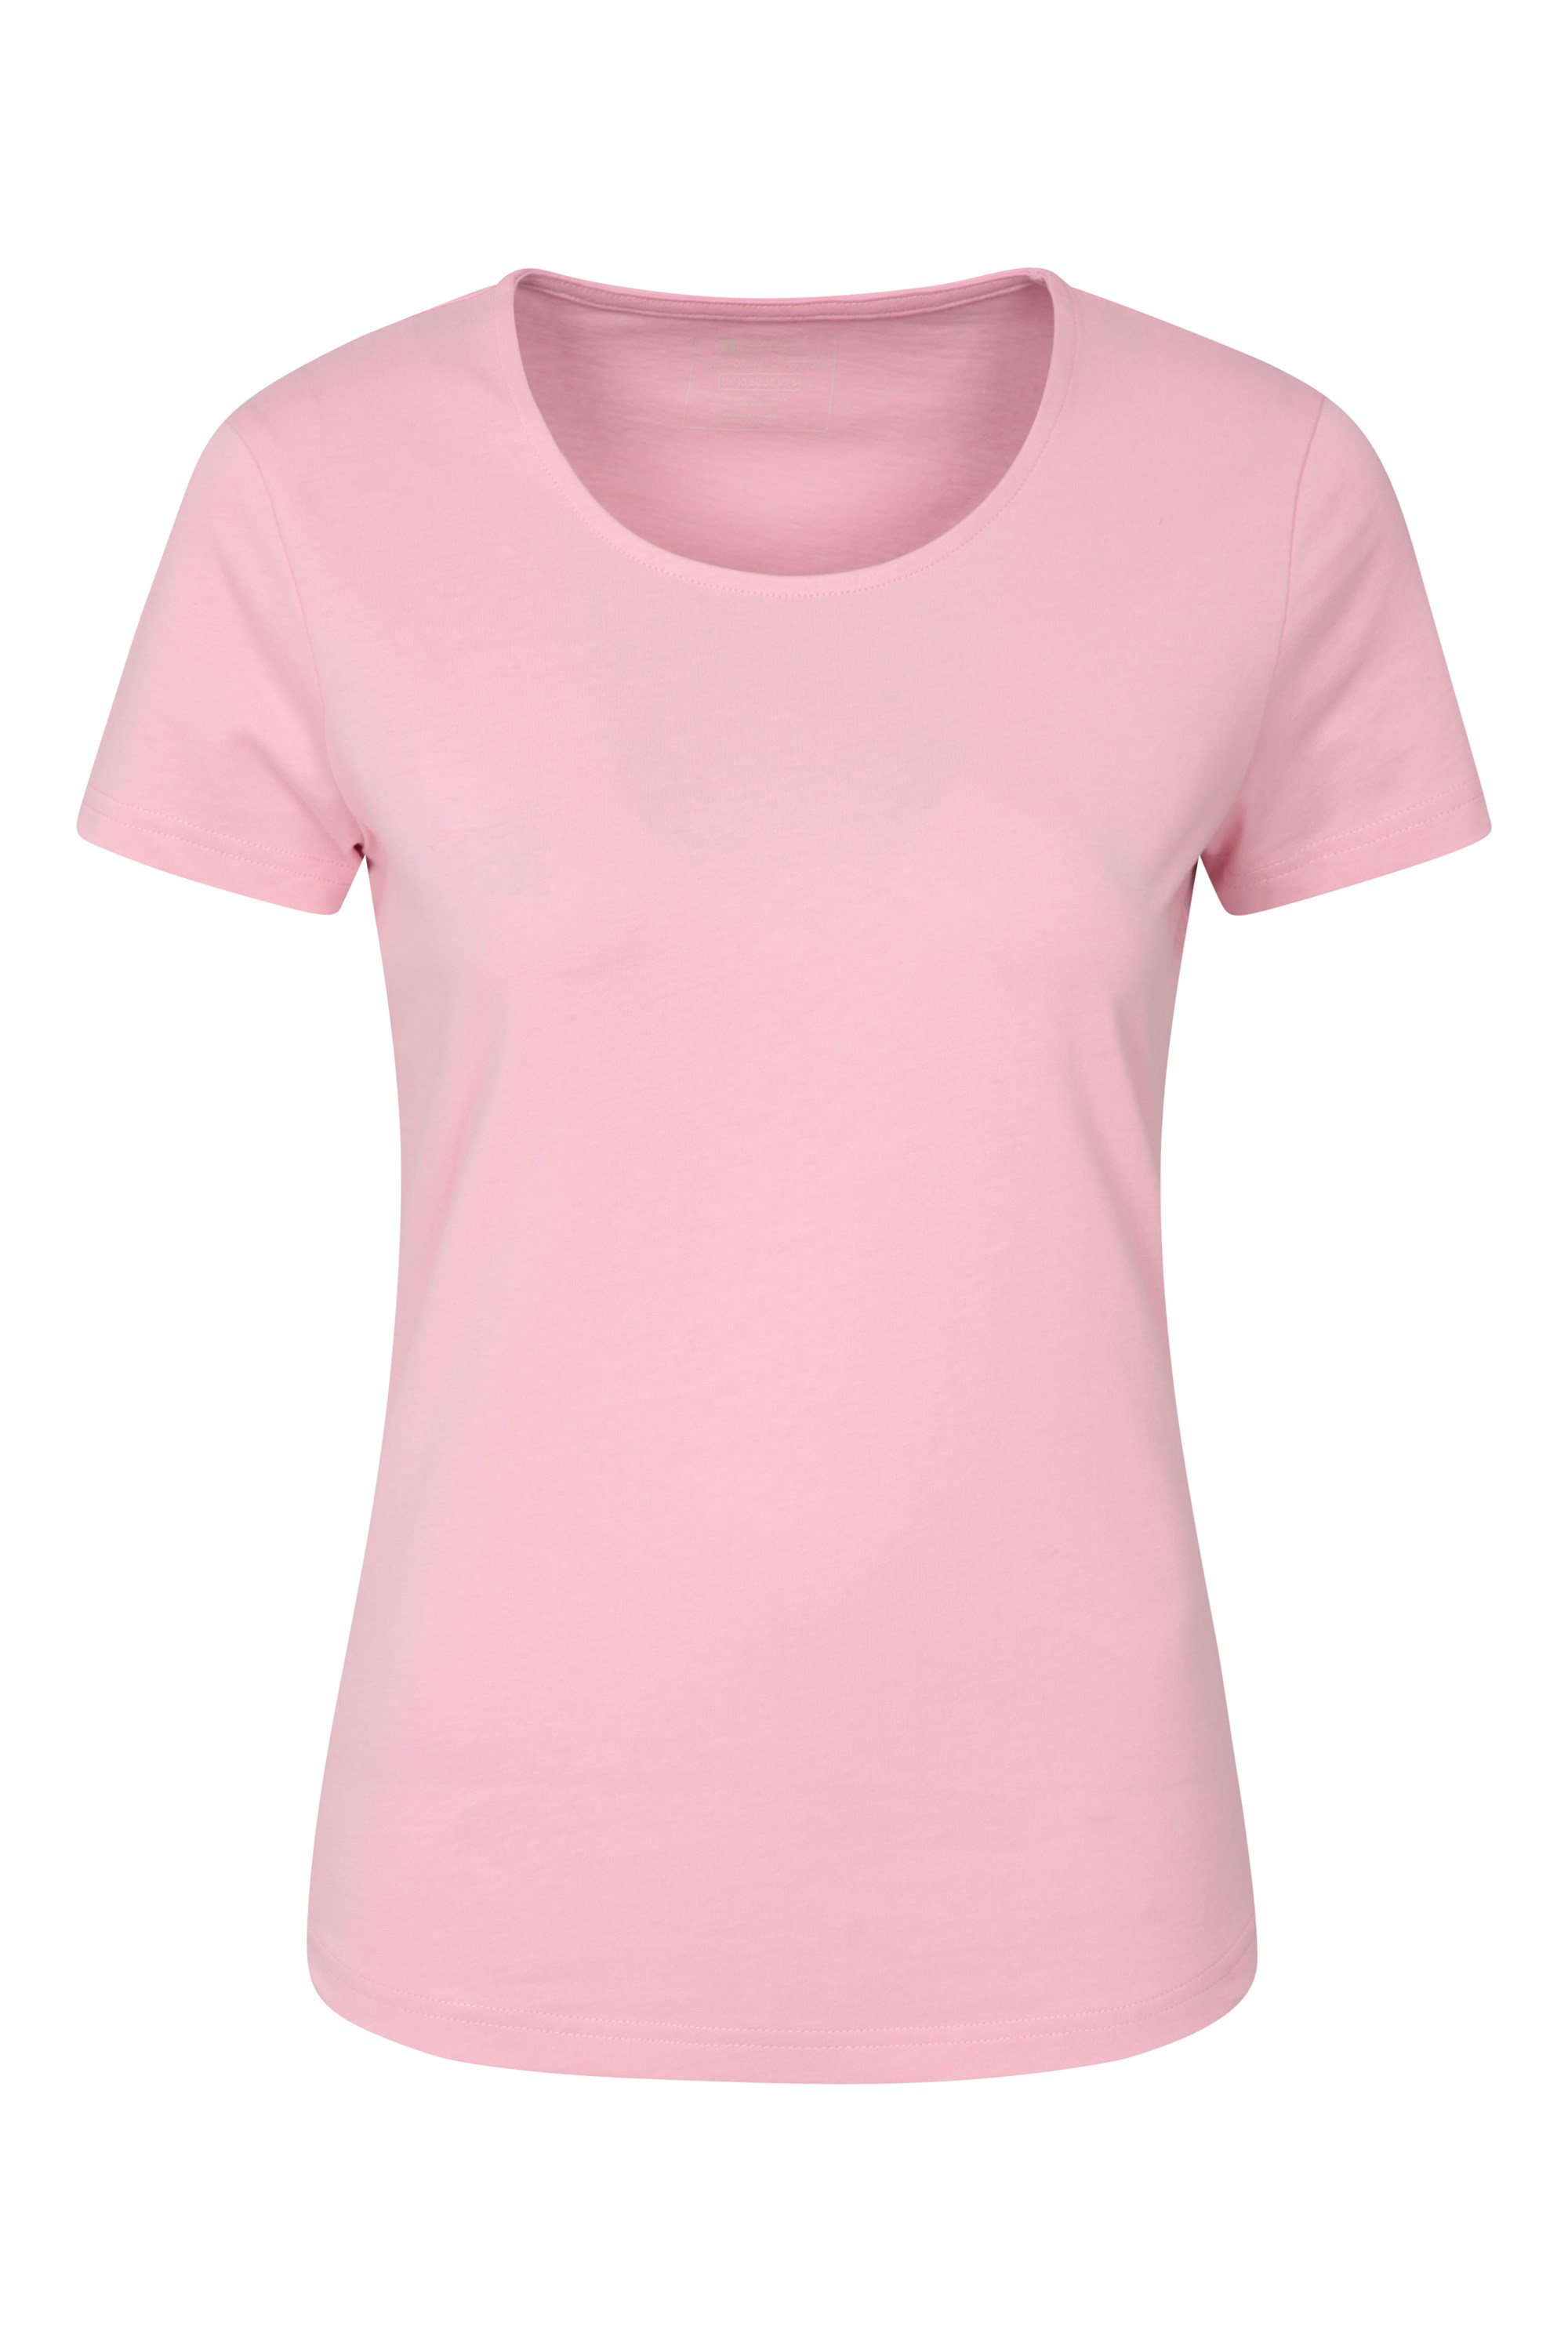 T-Shirt Organique Easy Femme - Rose